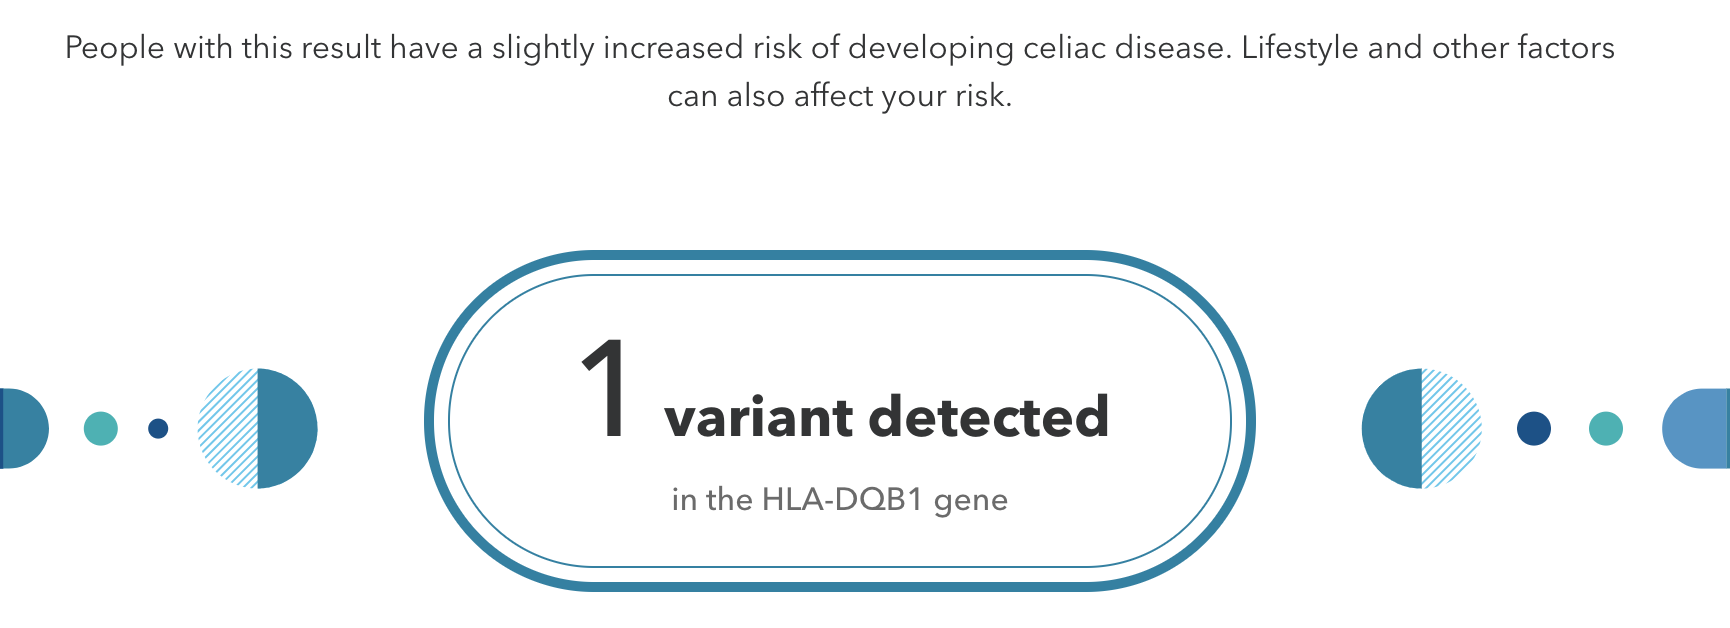 Genetic testing result: 1 variant detected in the HLA-DQB1 gene